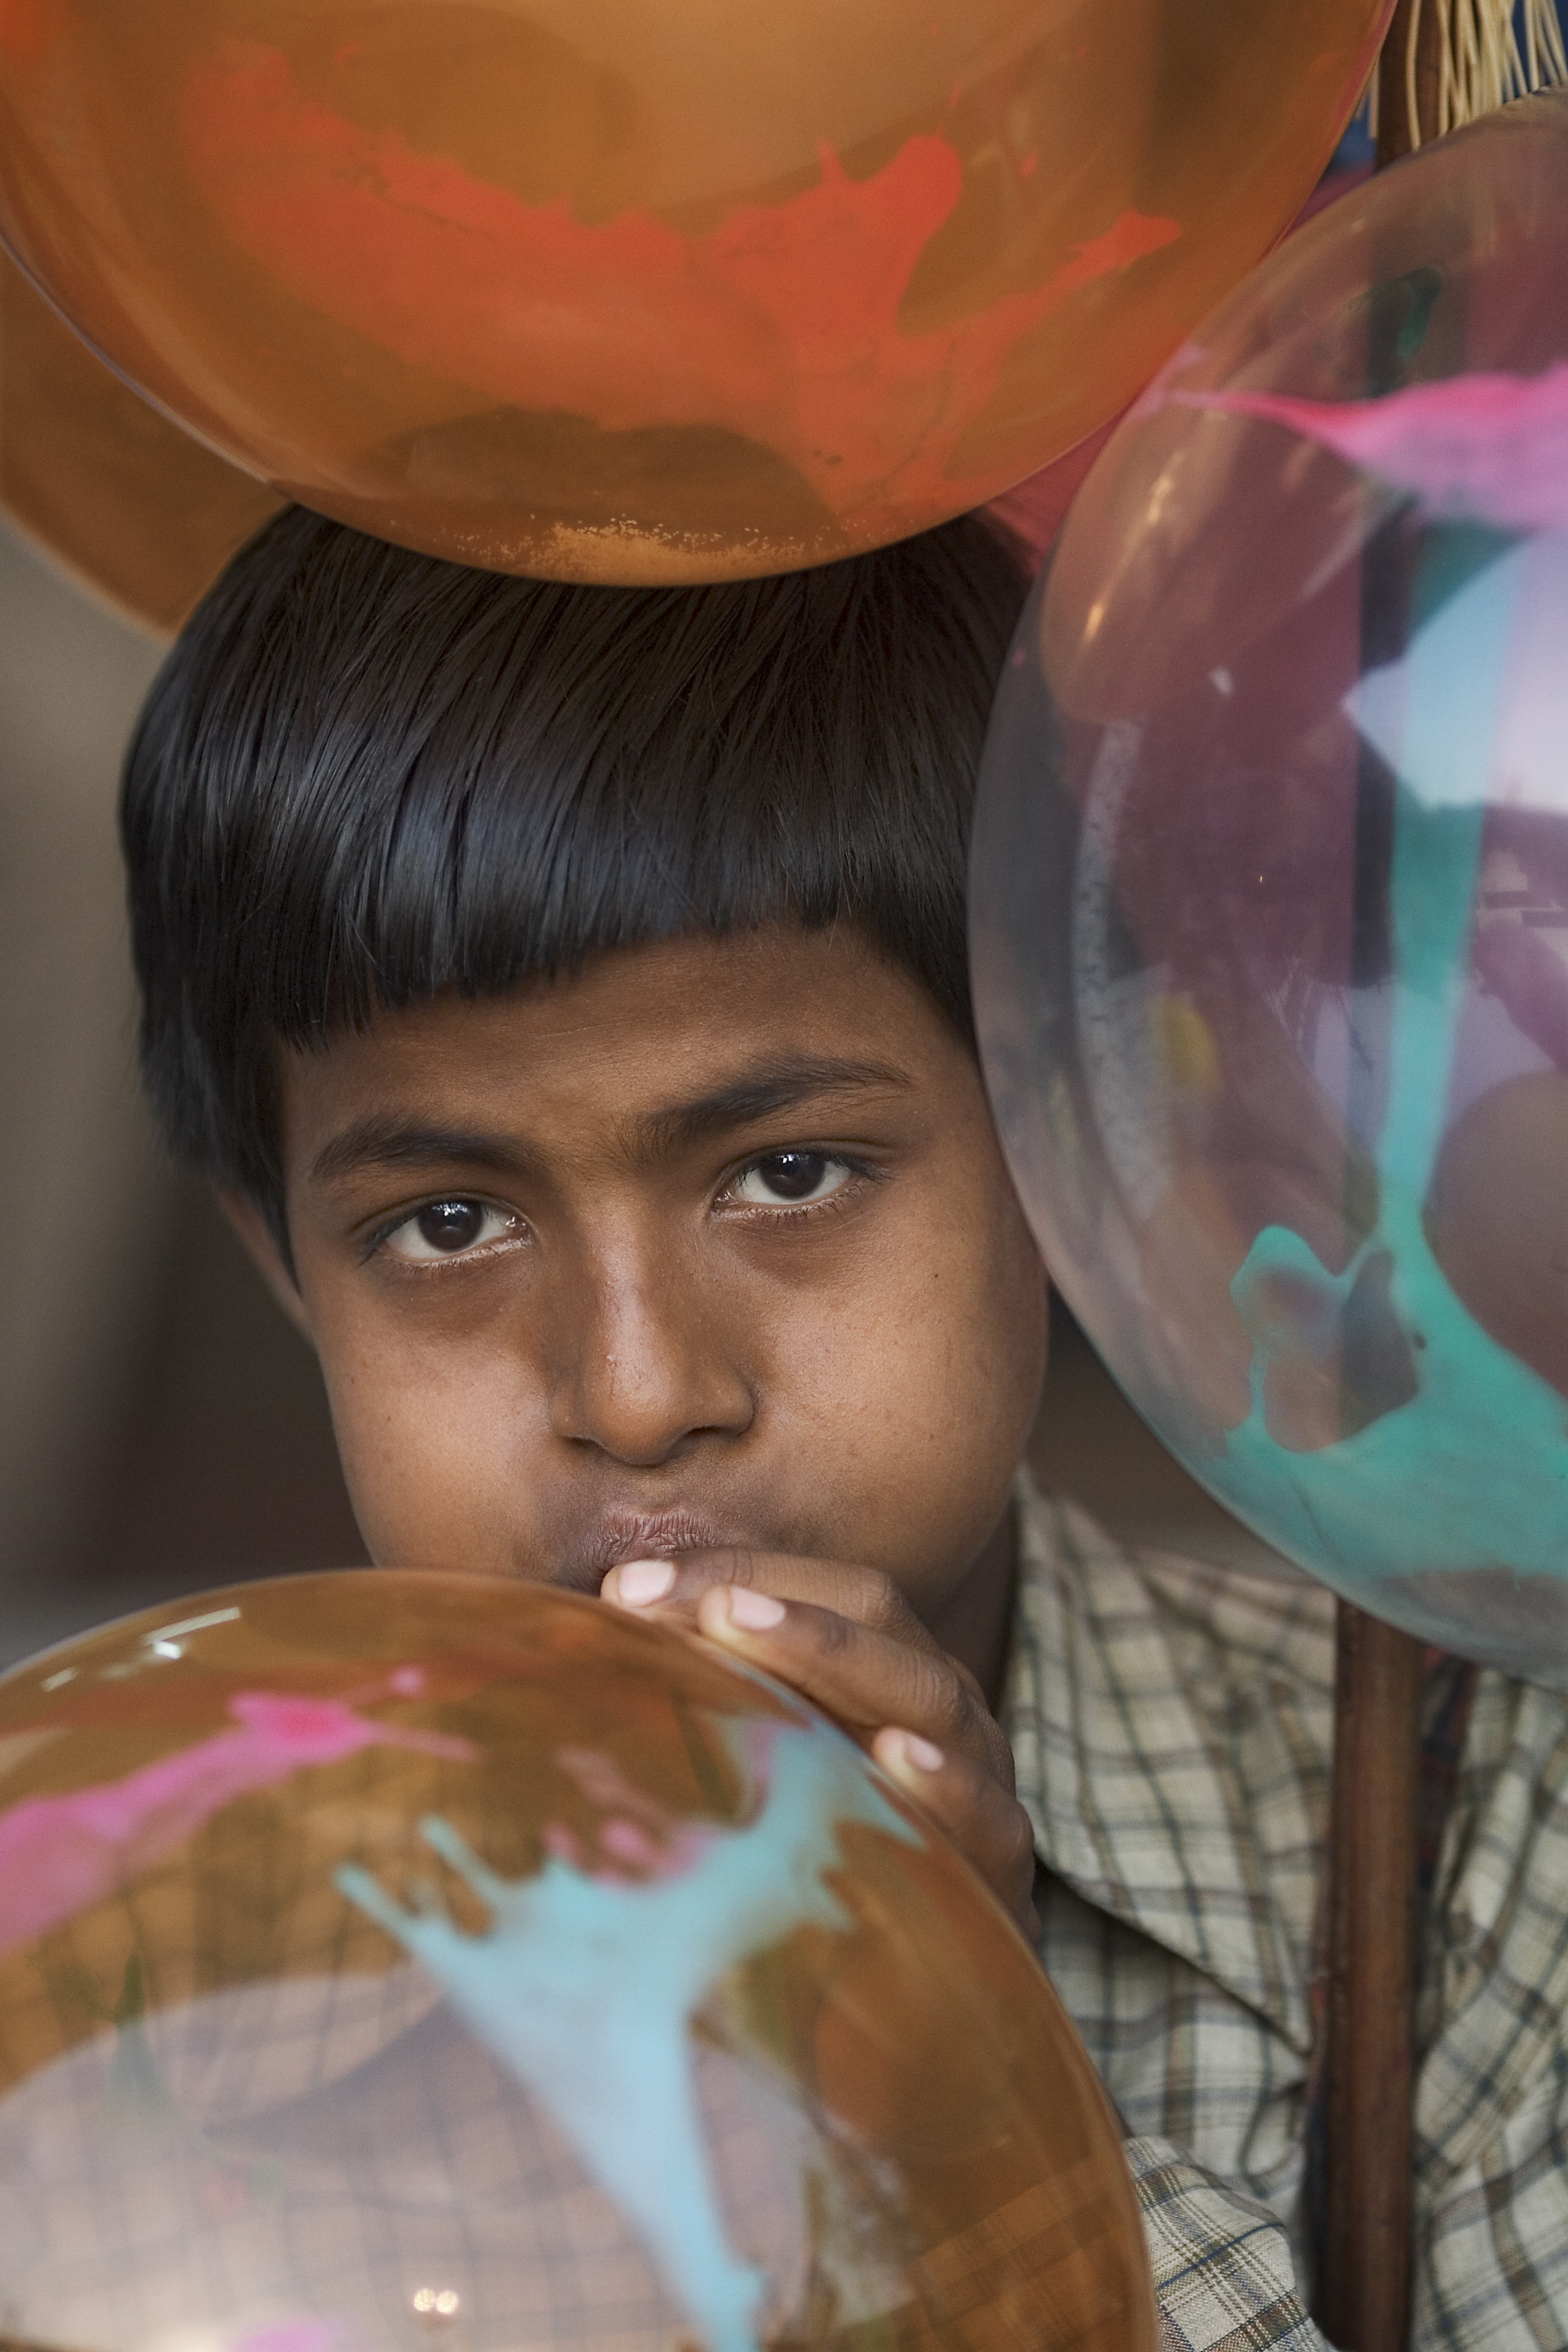 India - Varanasi boy balloon - 2735